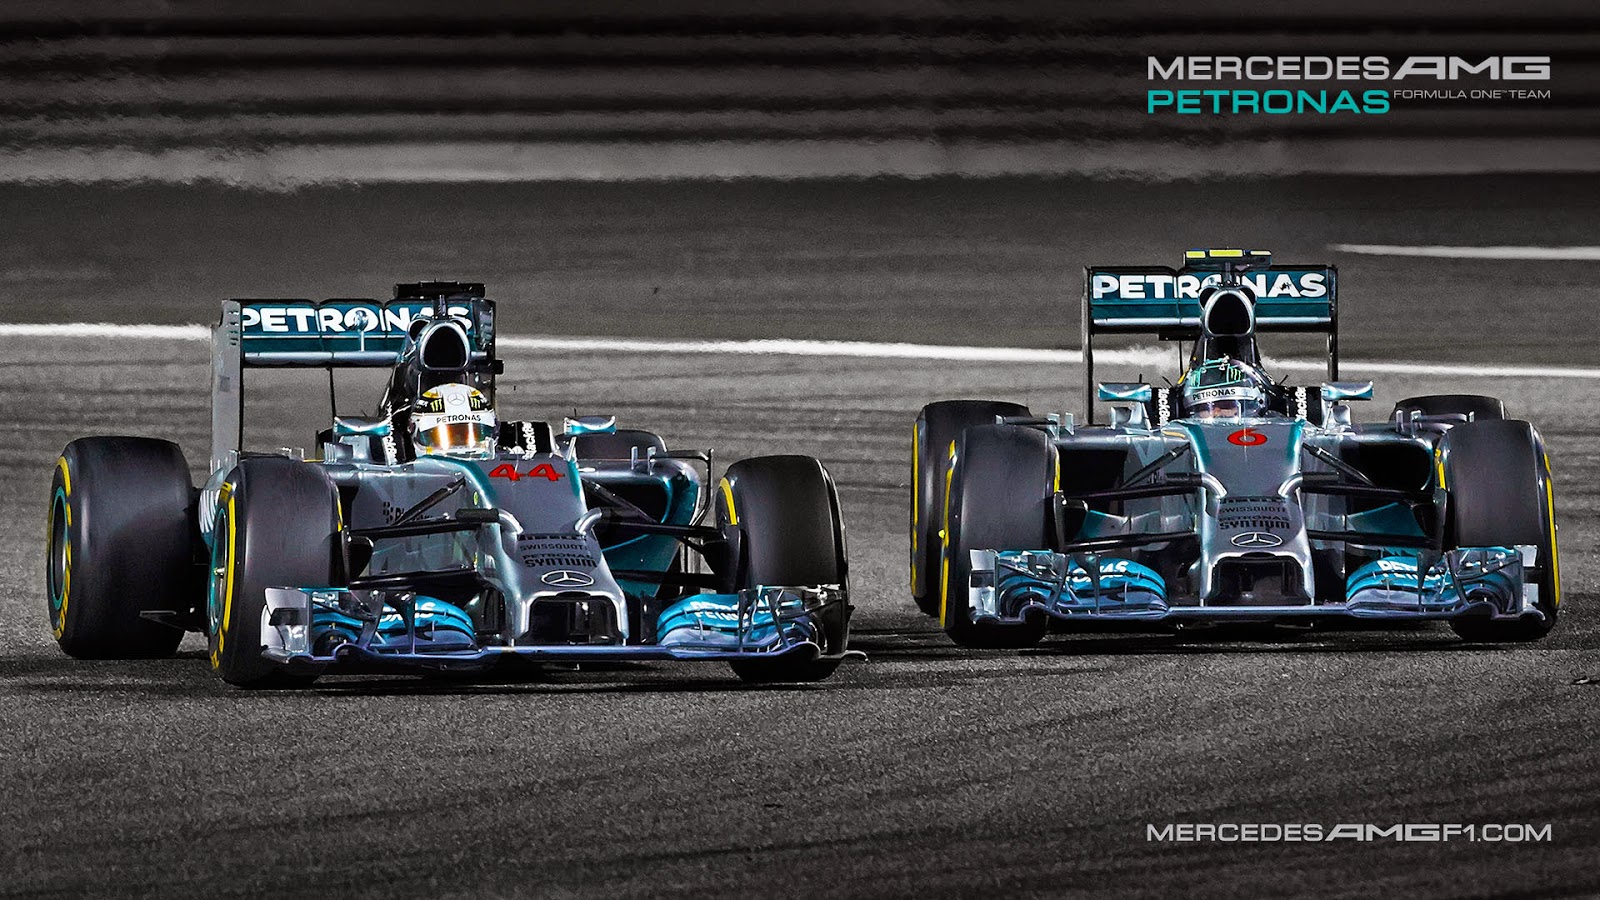 Mercedes AMG Petronas W05 2014 F1 Wallpaper via KFZoom ] 1600x900